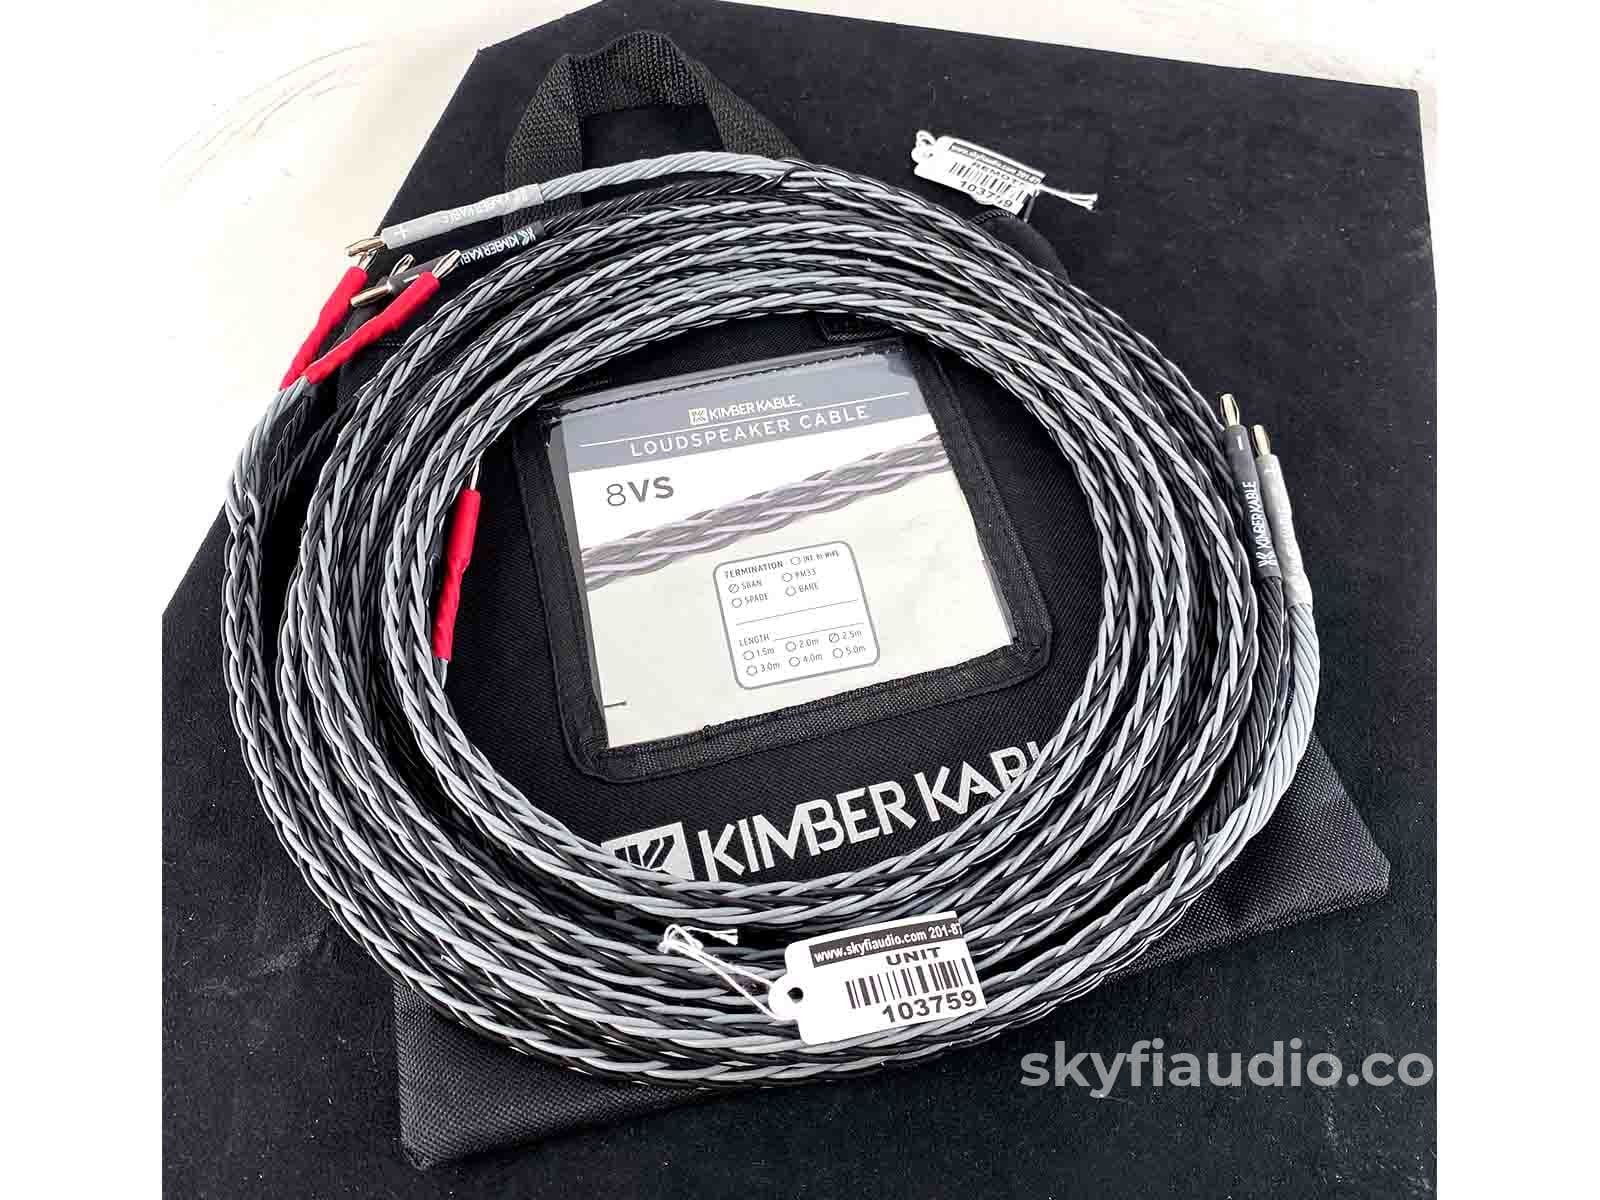 Kimber Kable Base Series 8Vs Speaker Cables (Pair) - 2.5M